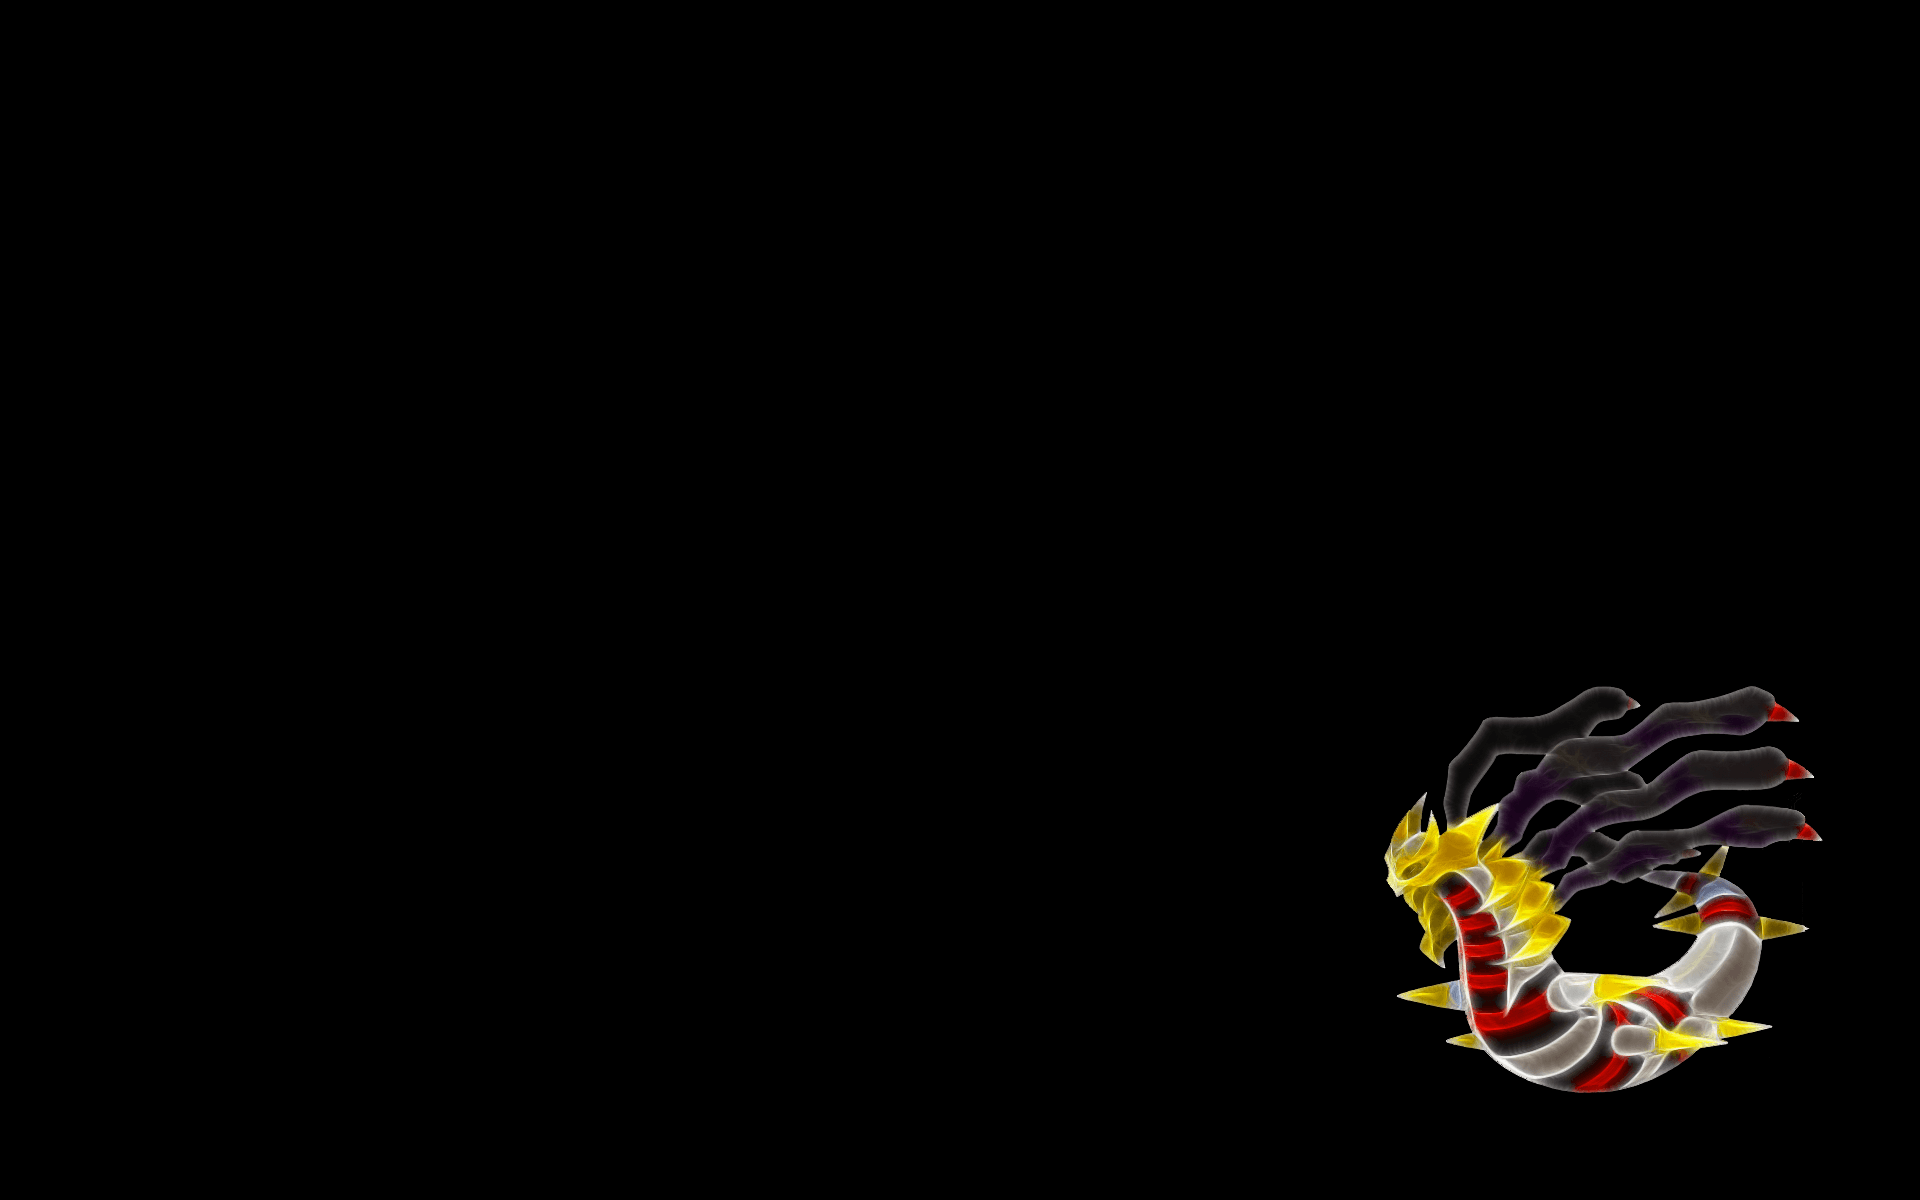 Pokemon, Fractalius, simple background, black background